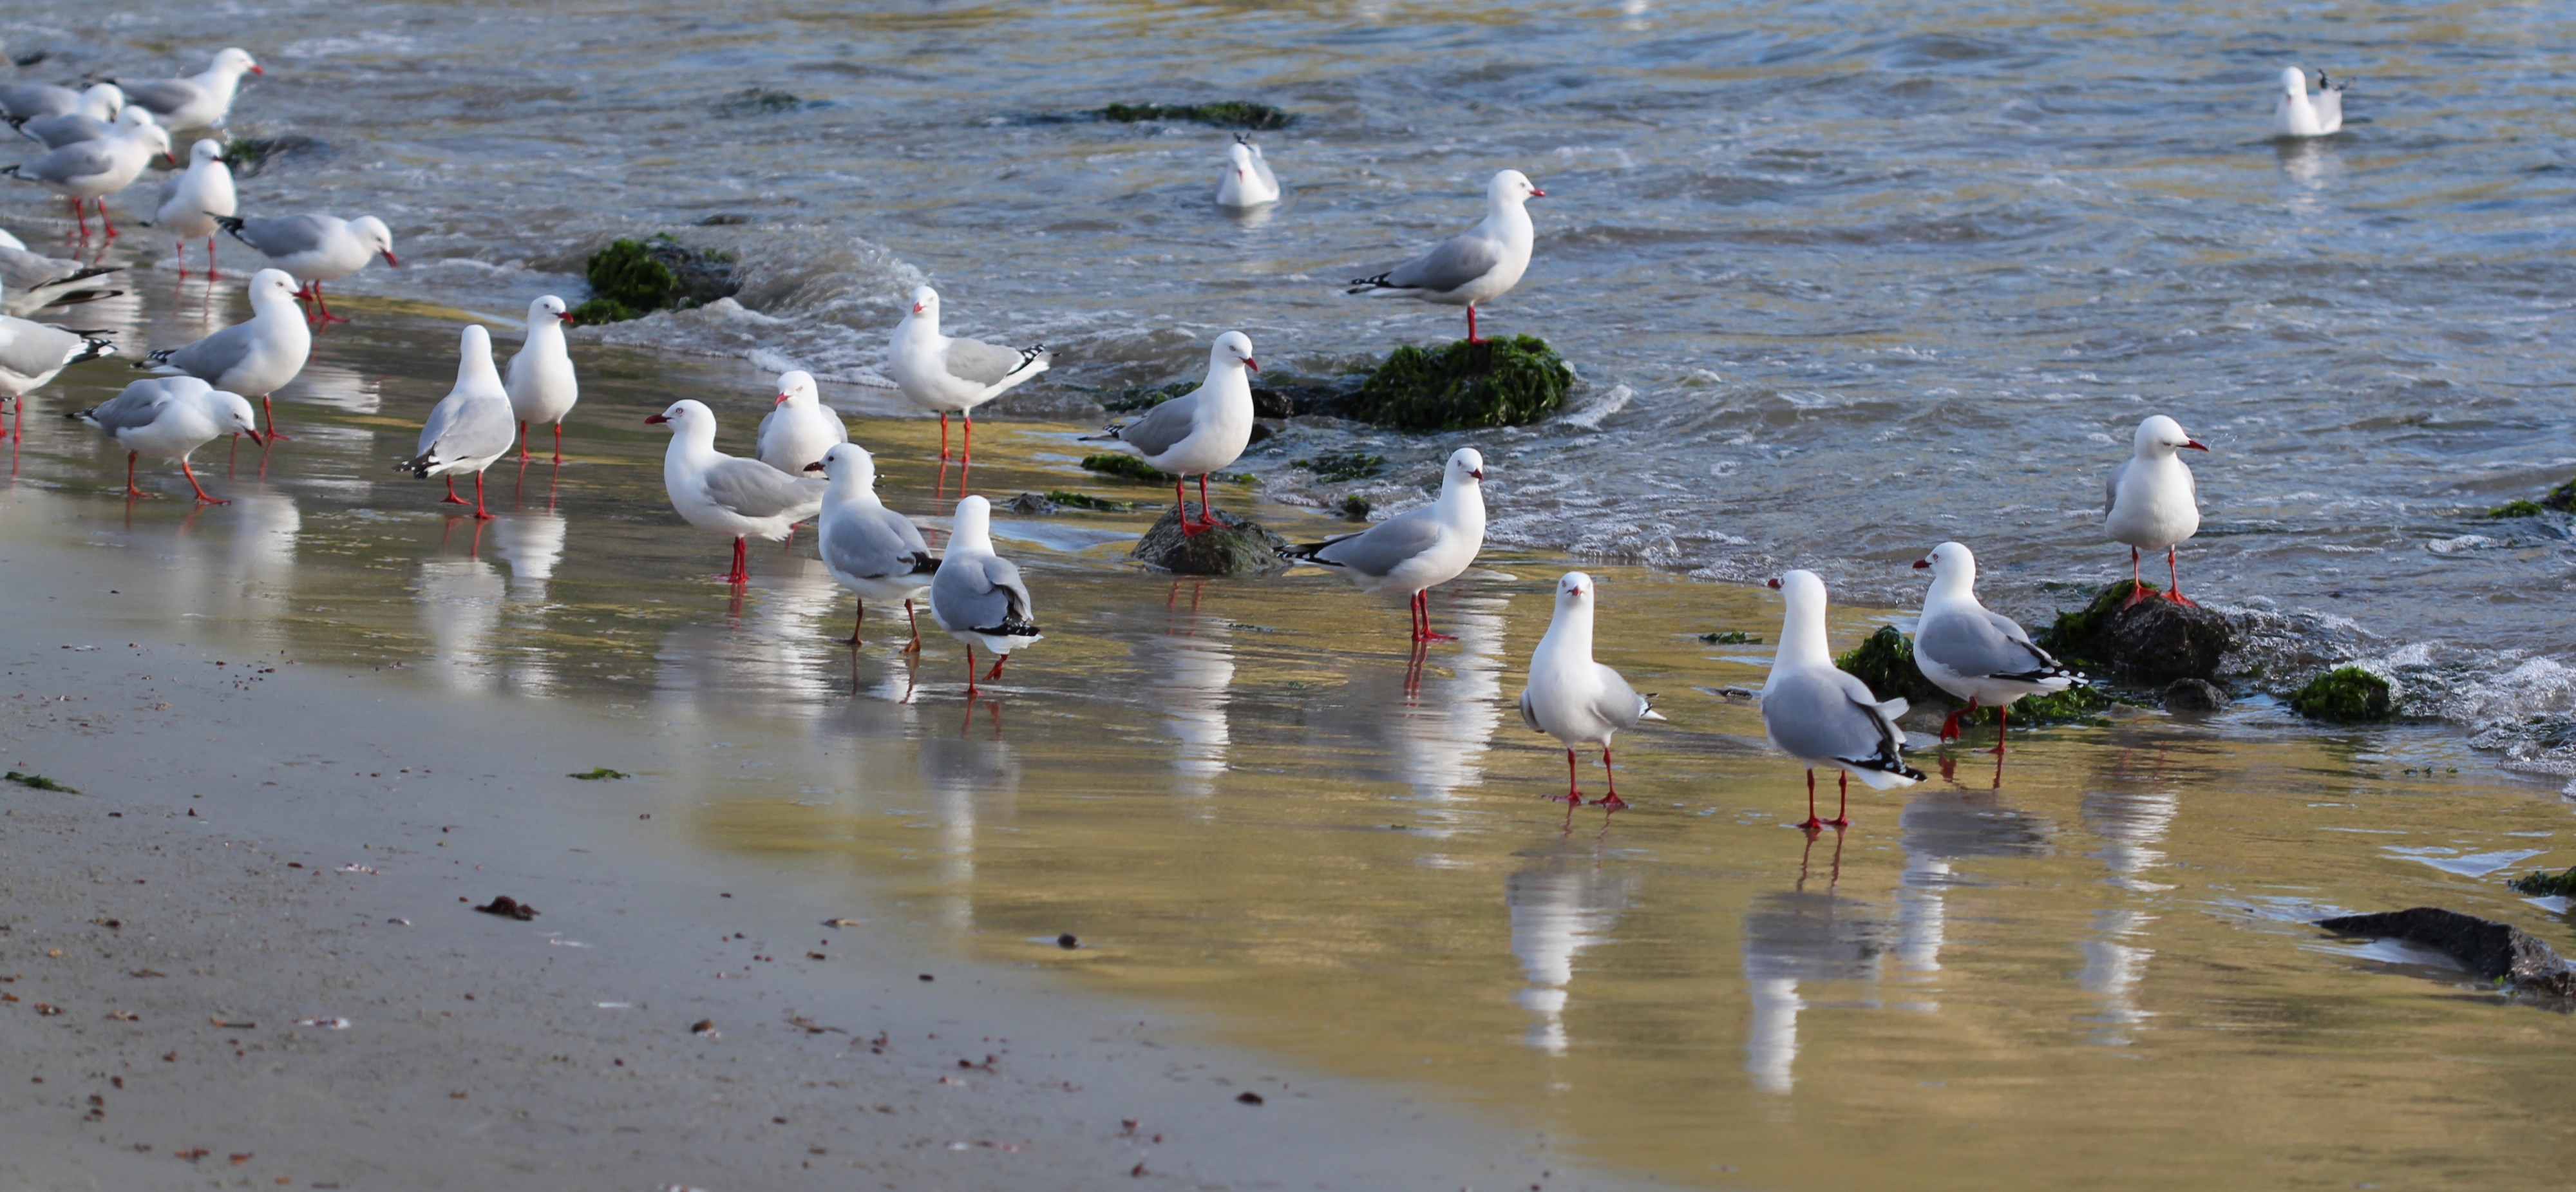 Red-billed Gulls (Chroicocephalus scopulinus) at the water's edge